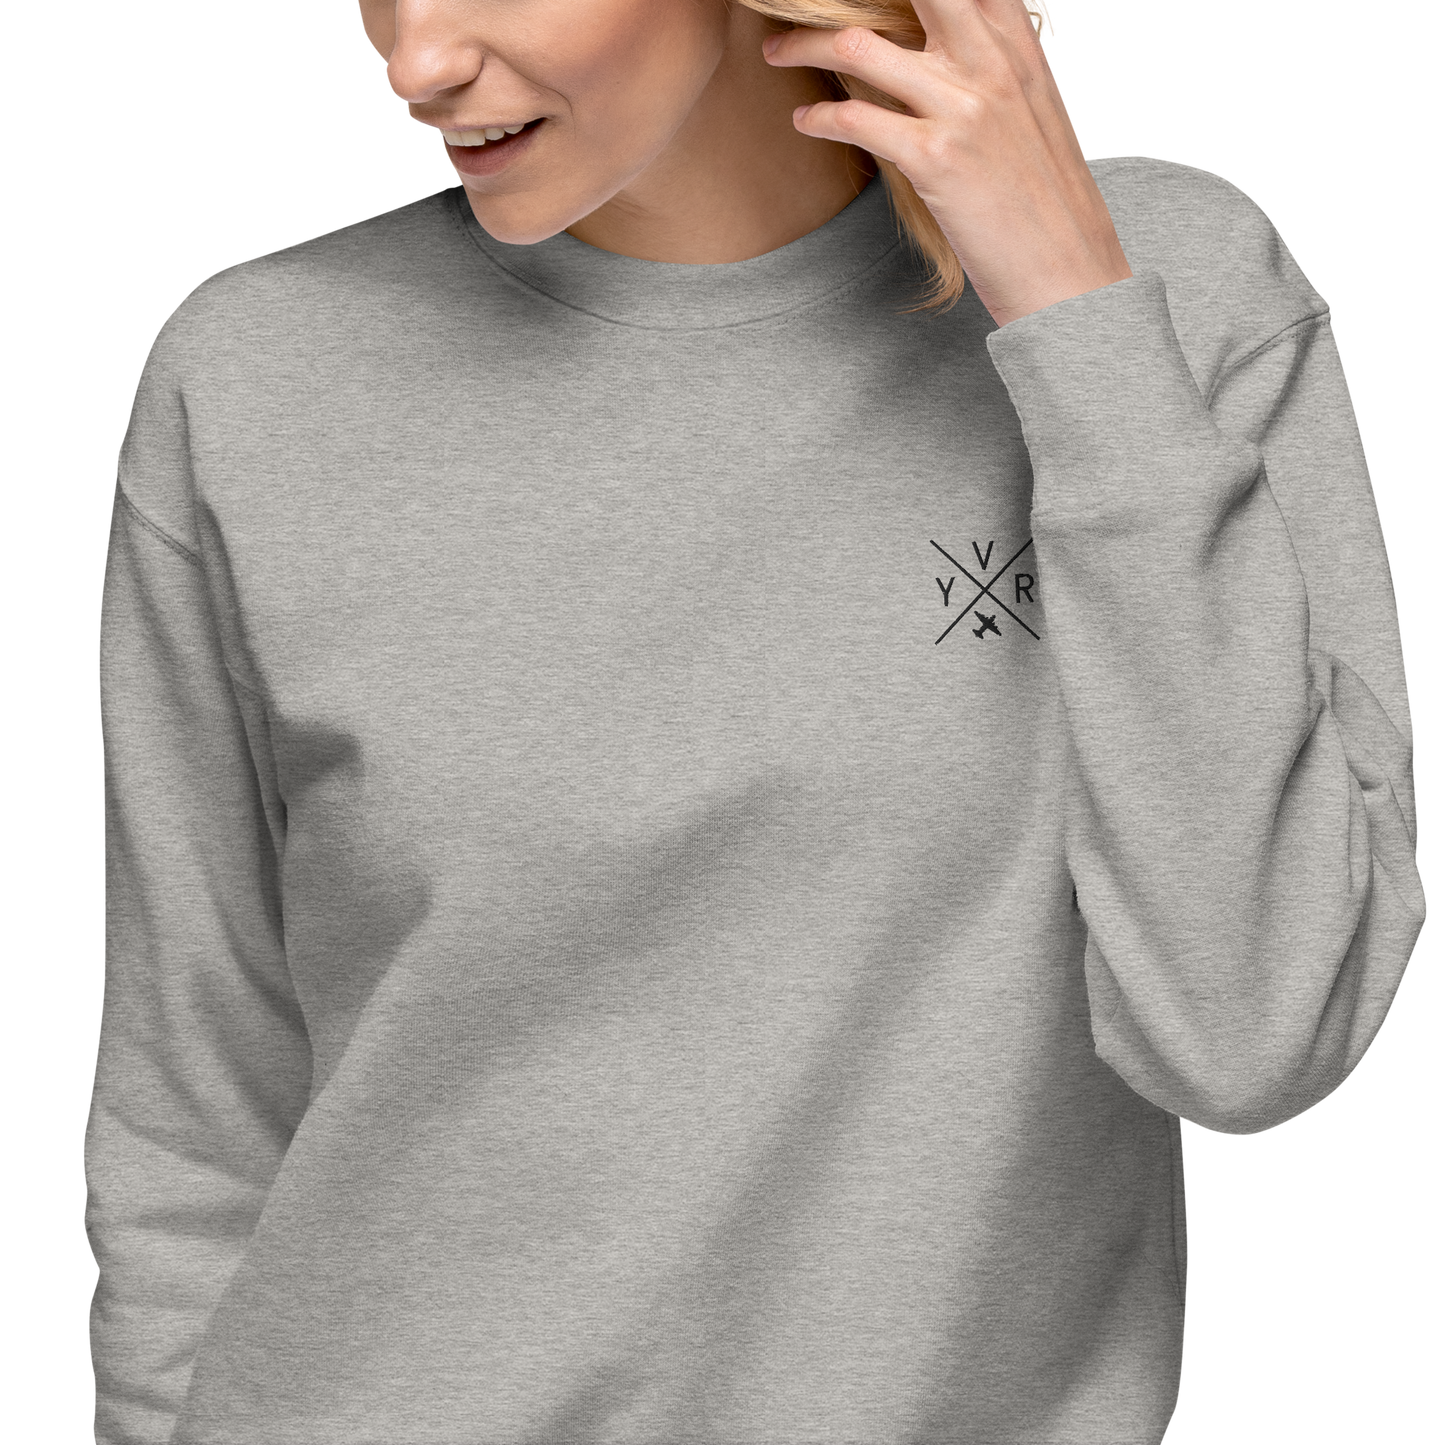 YHM Designs - YVR Vancouver Premium Sweatshirt - Crossed-X Design with Airport Code and Vintage Propliner - Black Embroidery - Image 03